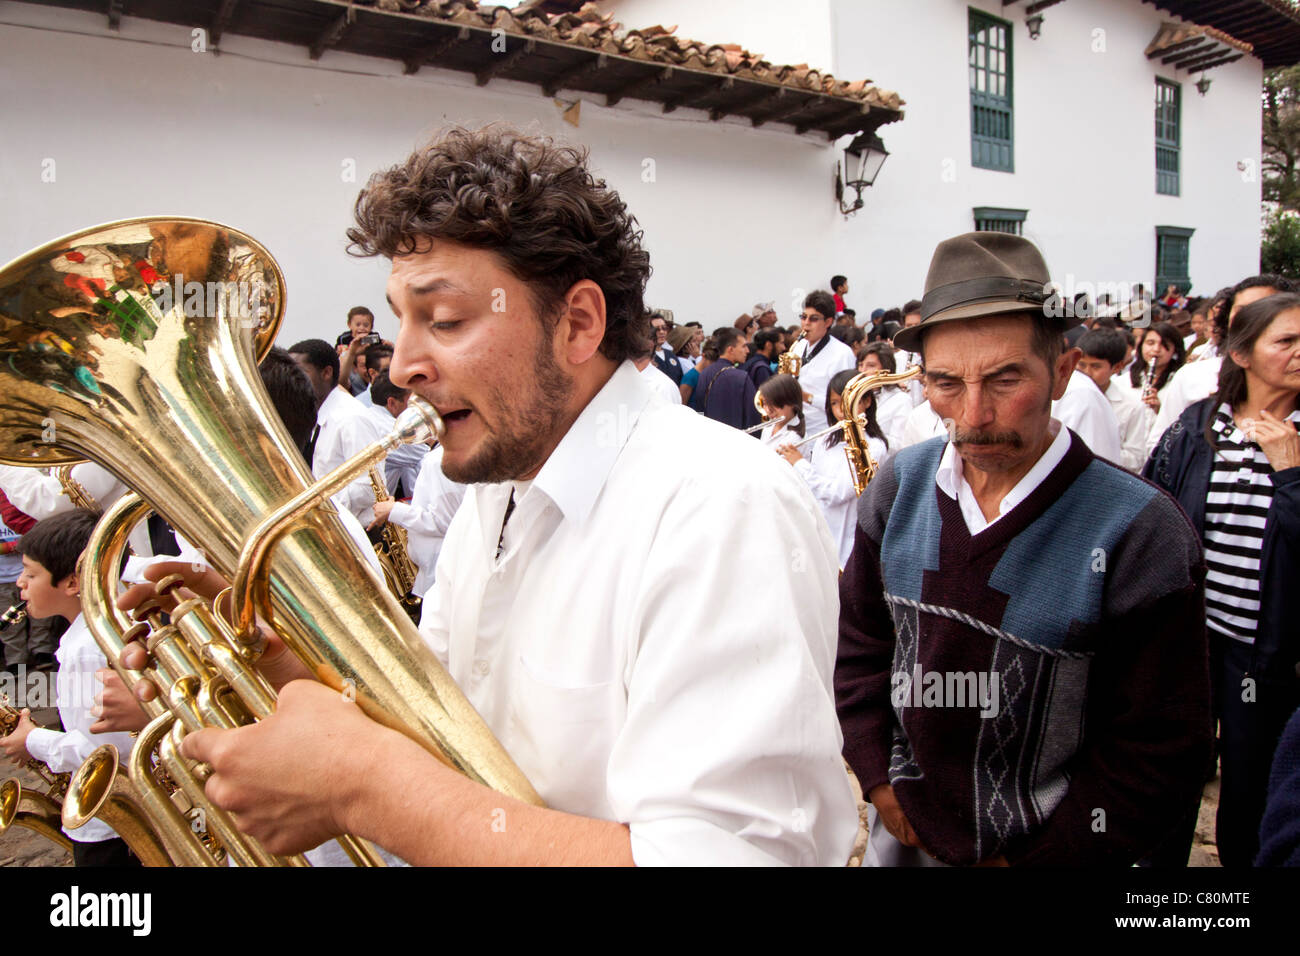 marching band during a public feast in Villa de Leyva, Boyacá, Colombia, South America Stock Photo